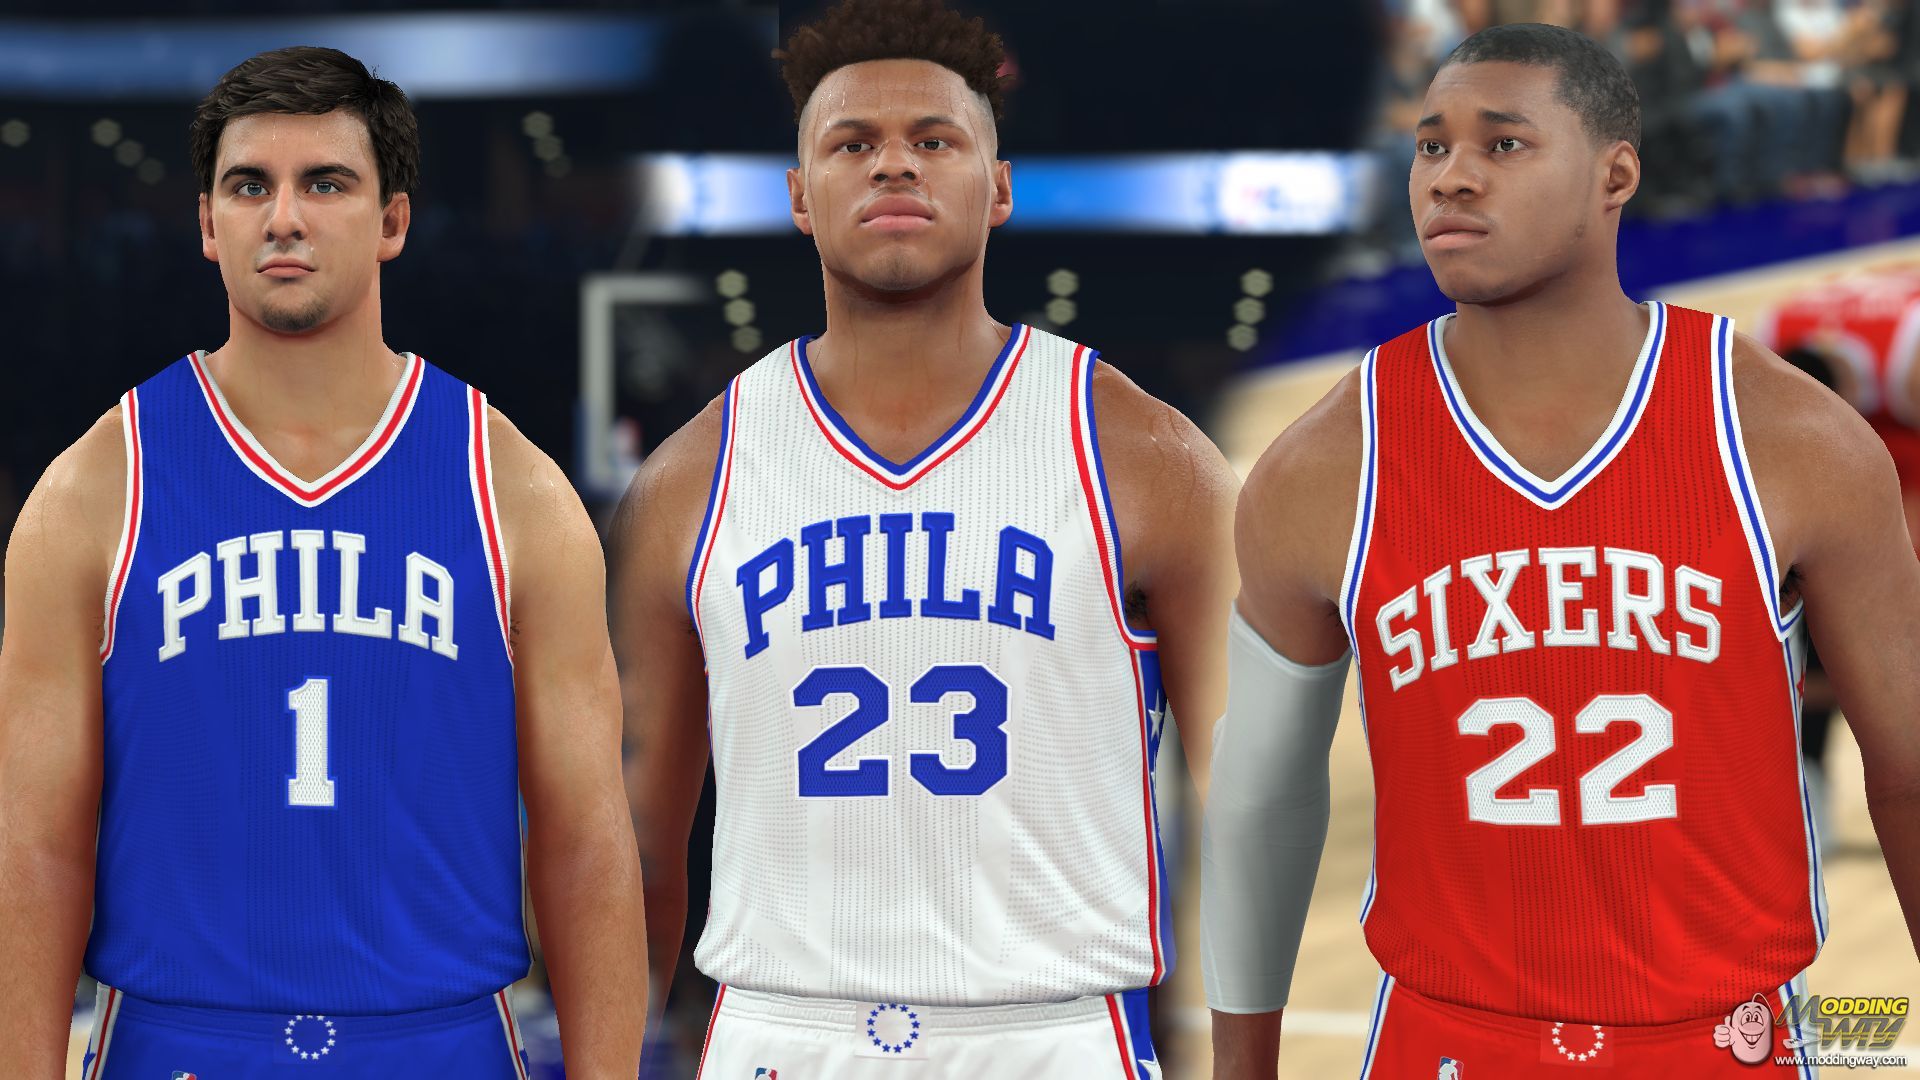 Realistic sport shirt Philadelphia 76ers, jersey template for